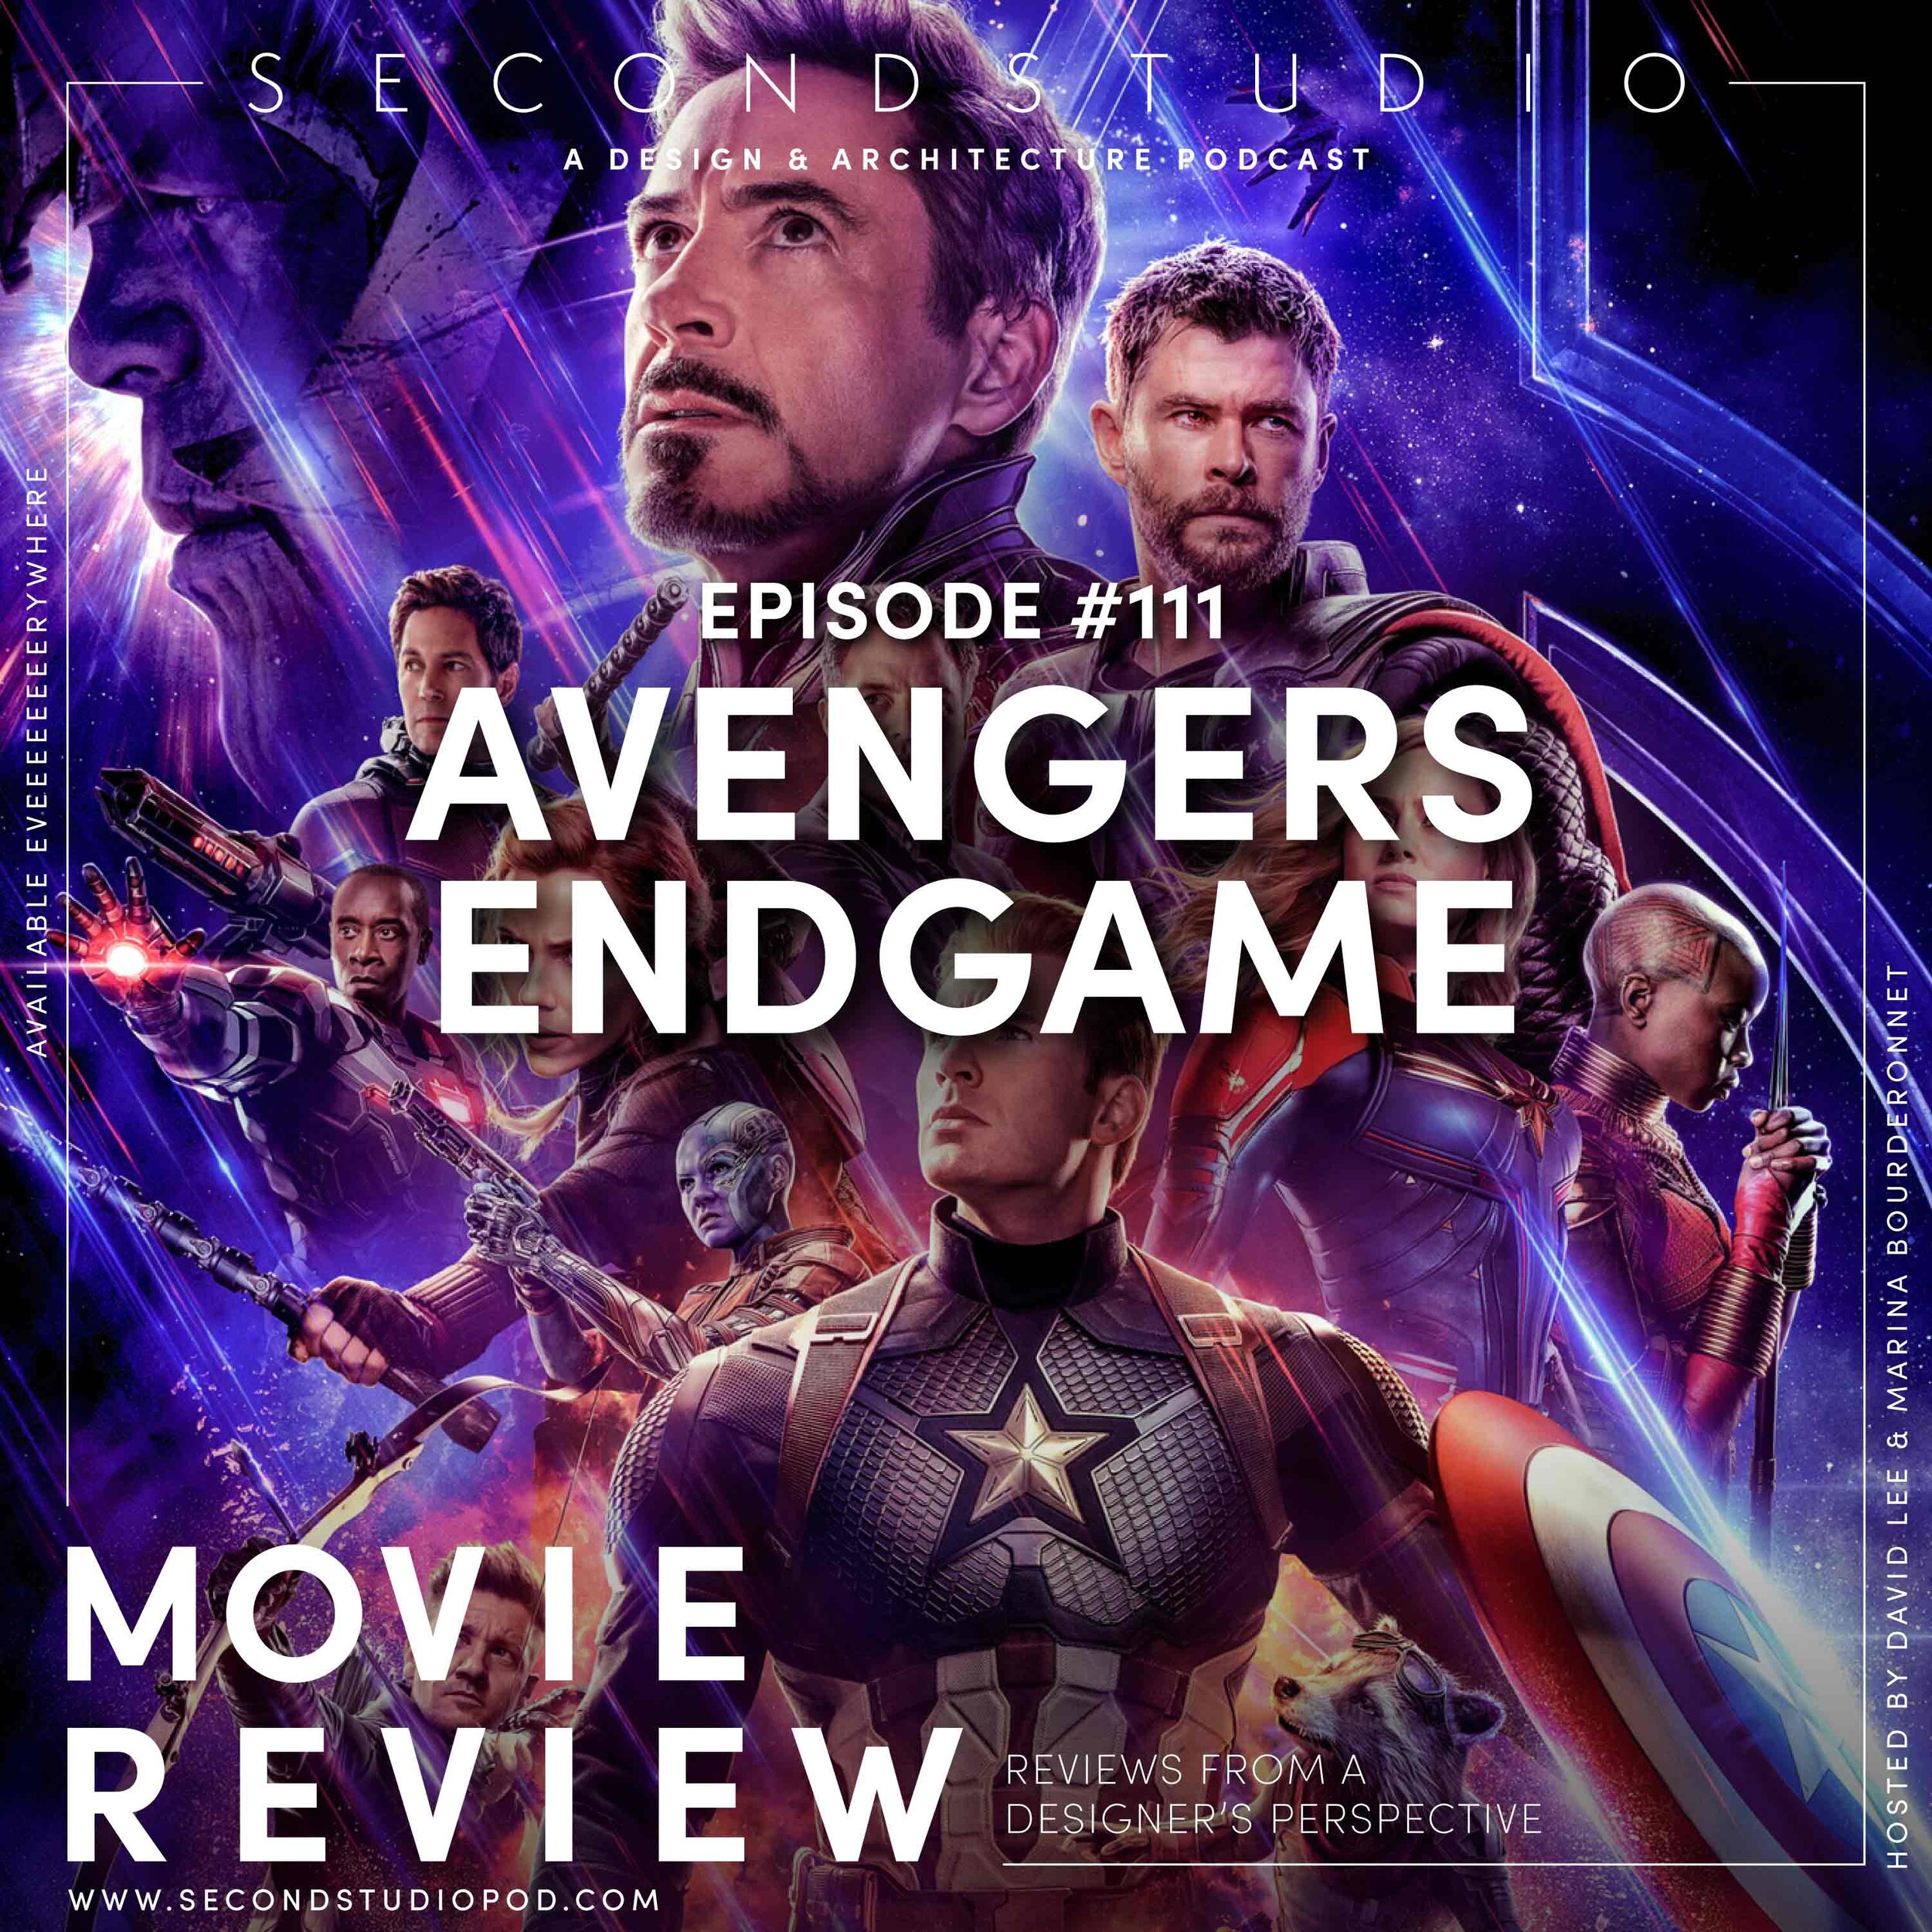 Blu Ray Review: AVENGERS ENDGAME